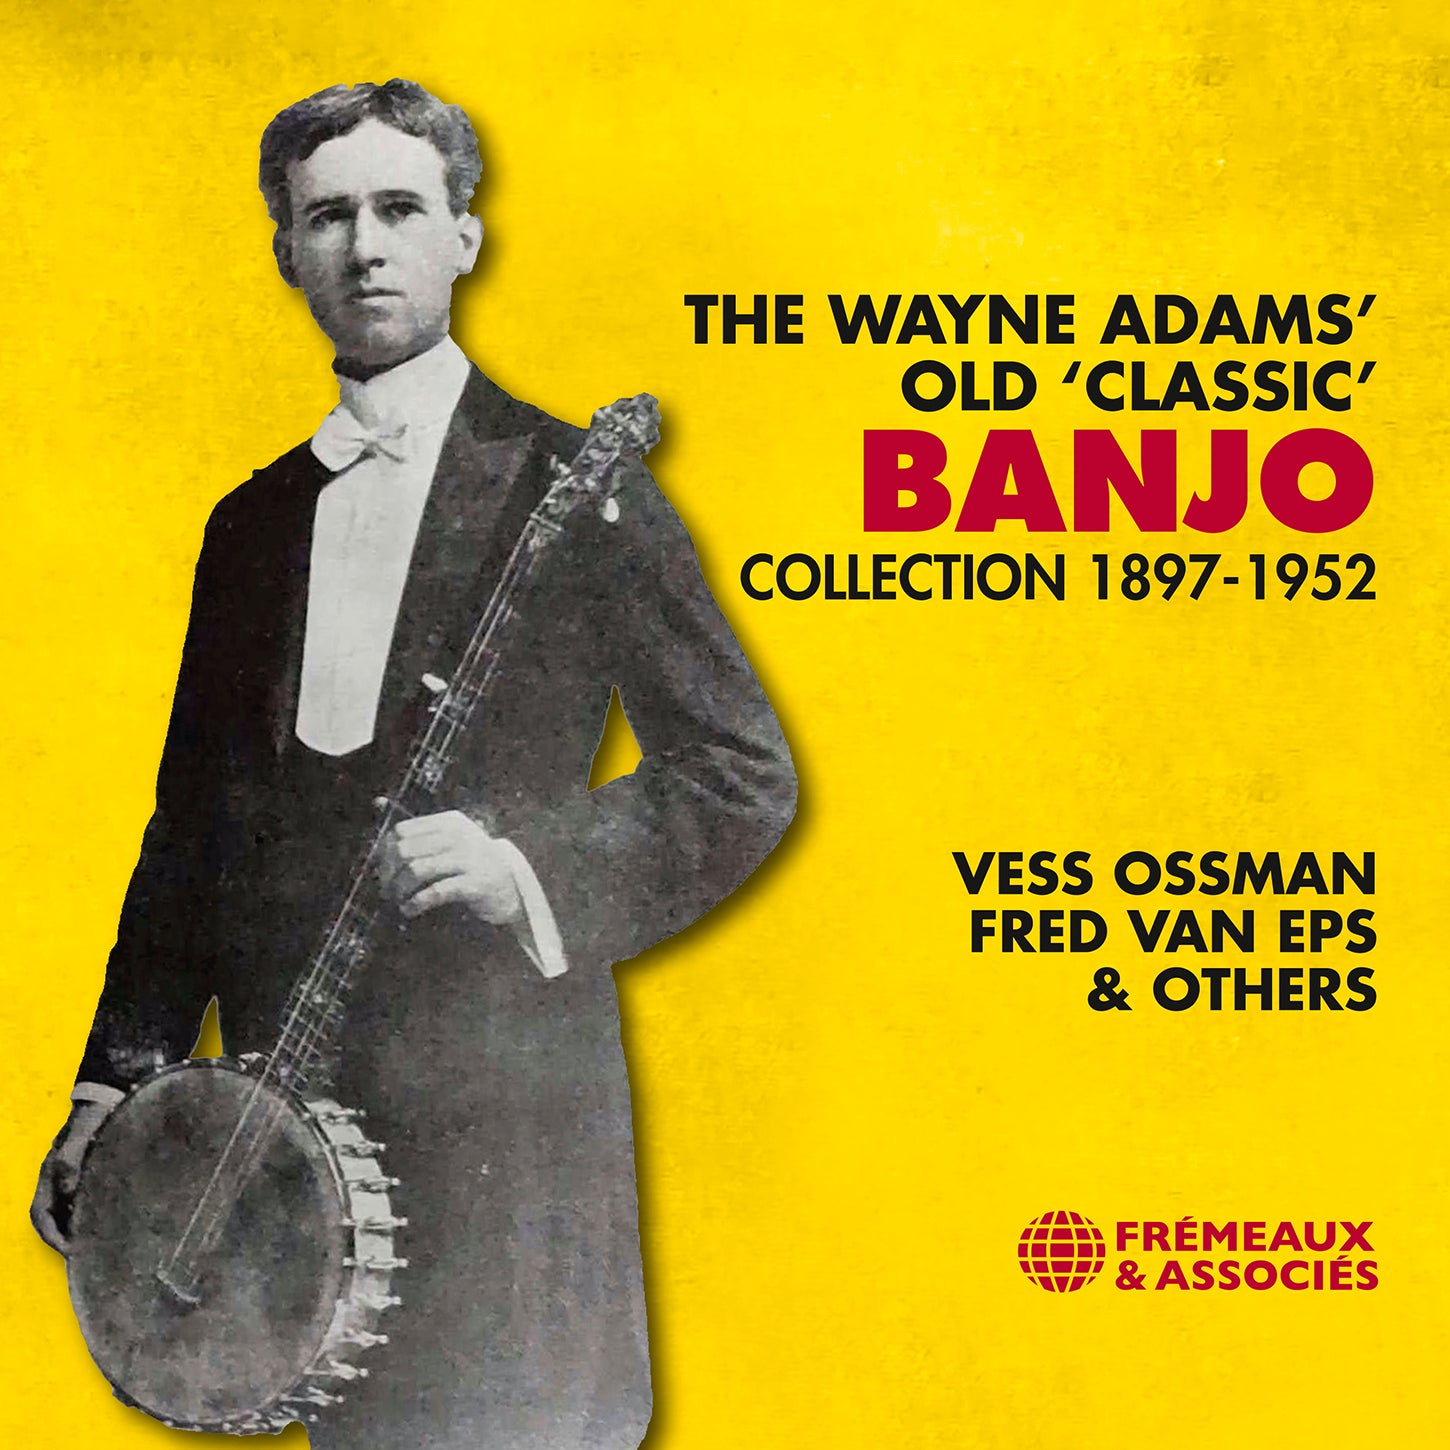 Wayne Adams’ Old ‘Classic’ Banjo Collection, 1897-1952